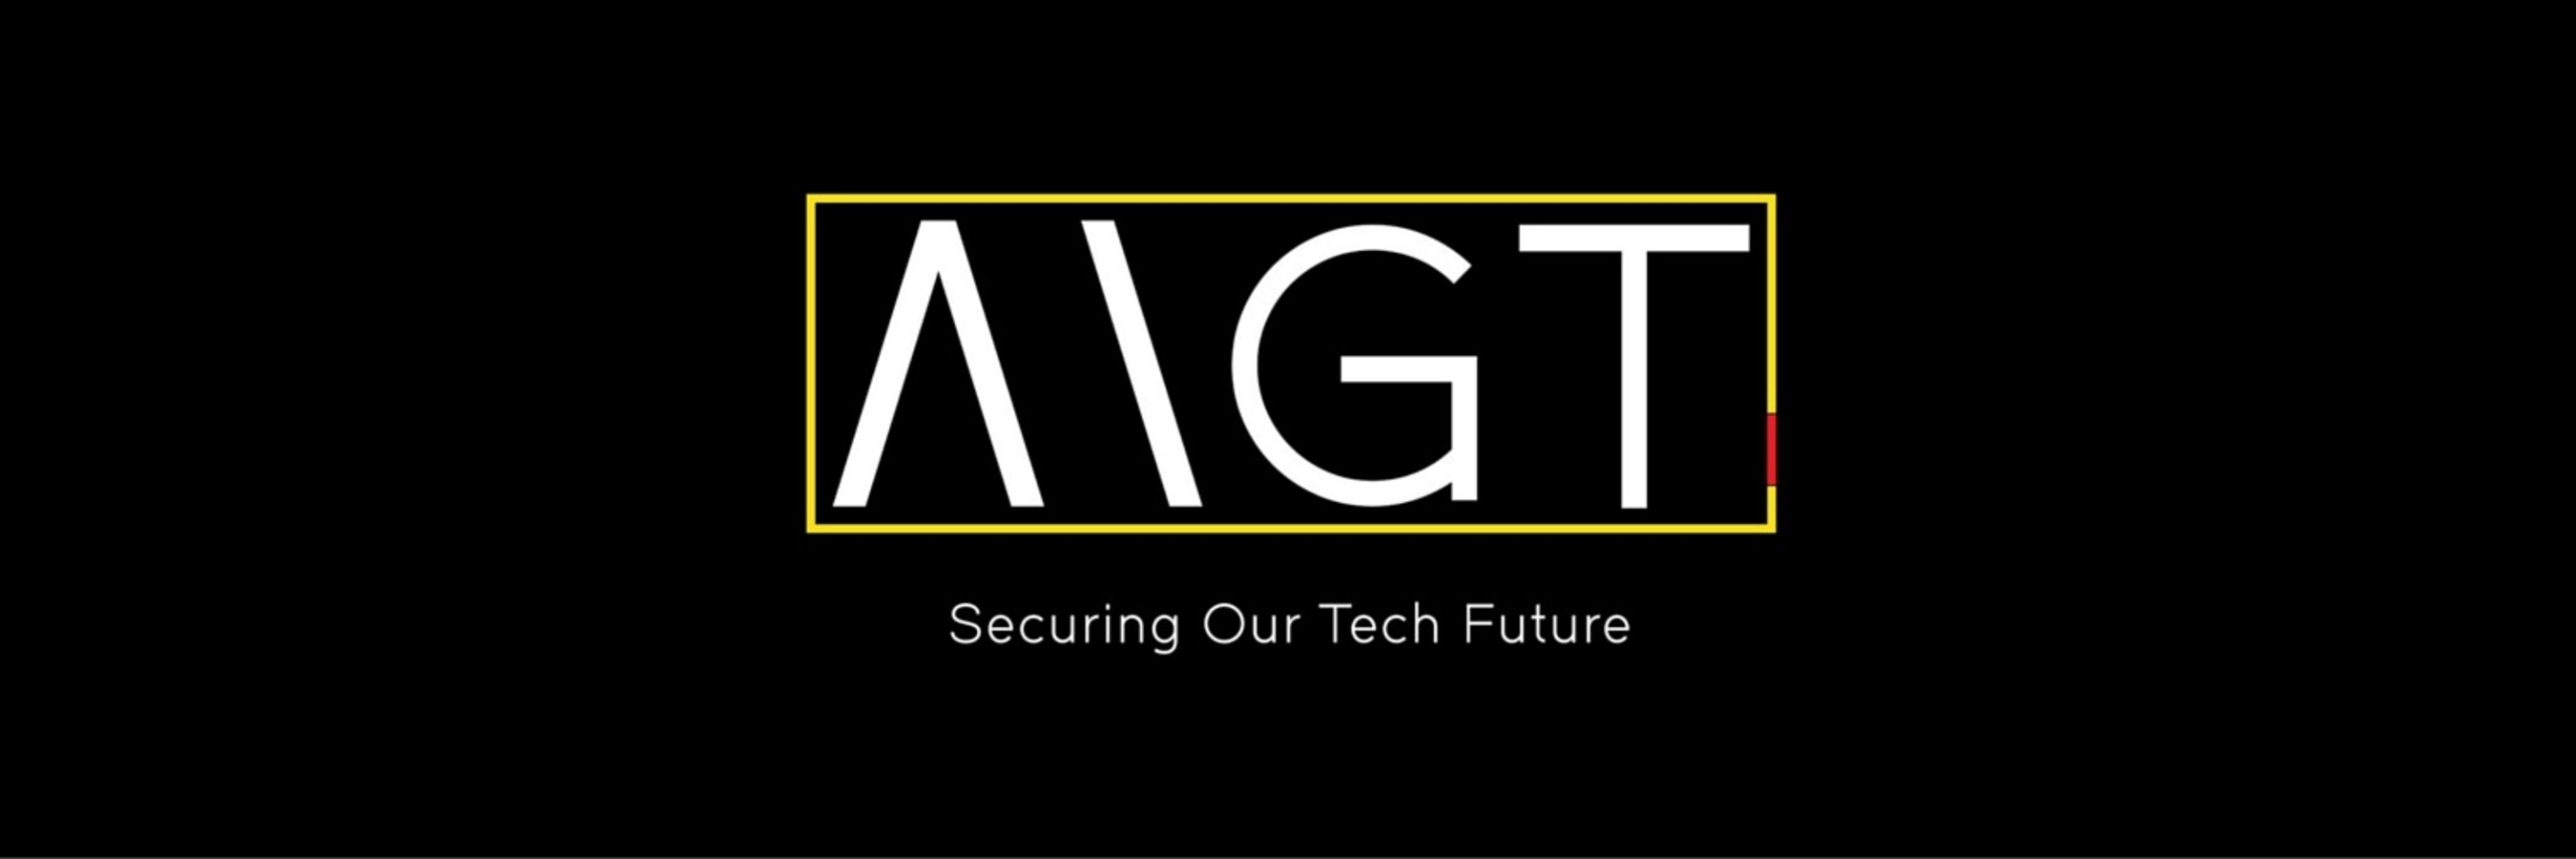 MGT Capital Investments, Inc. (PRNewsFoto/MGT Capital Investments, Inc.)